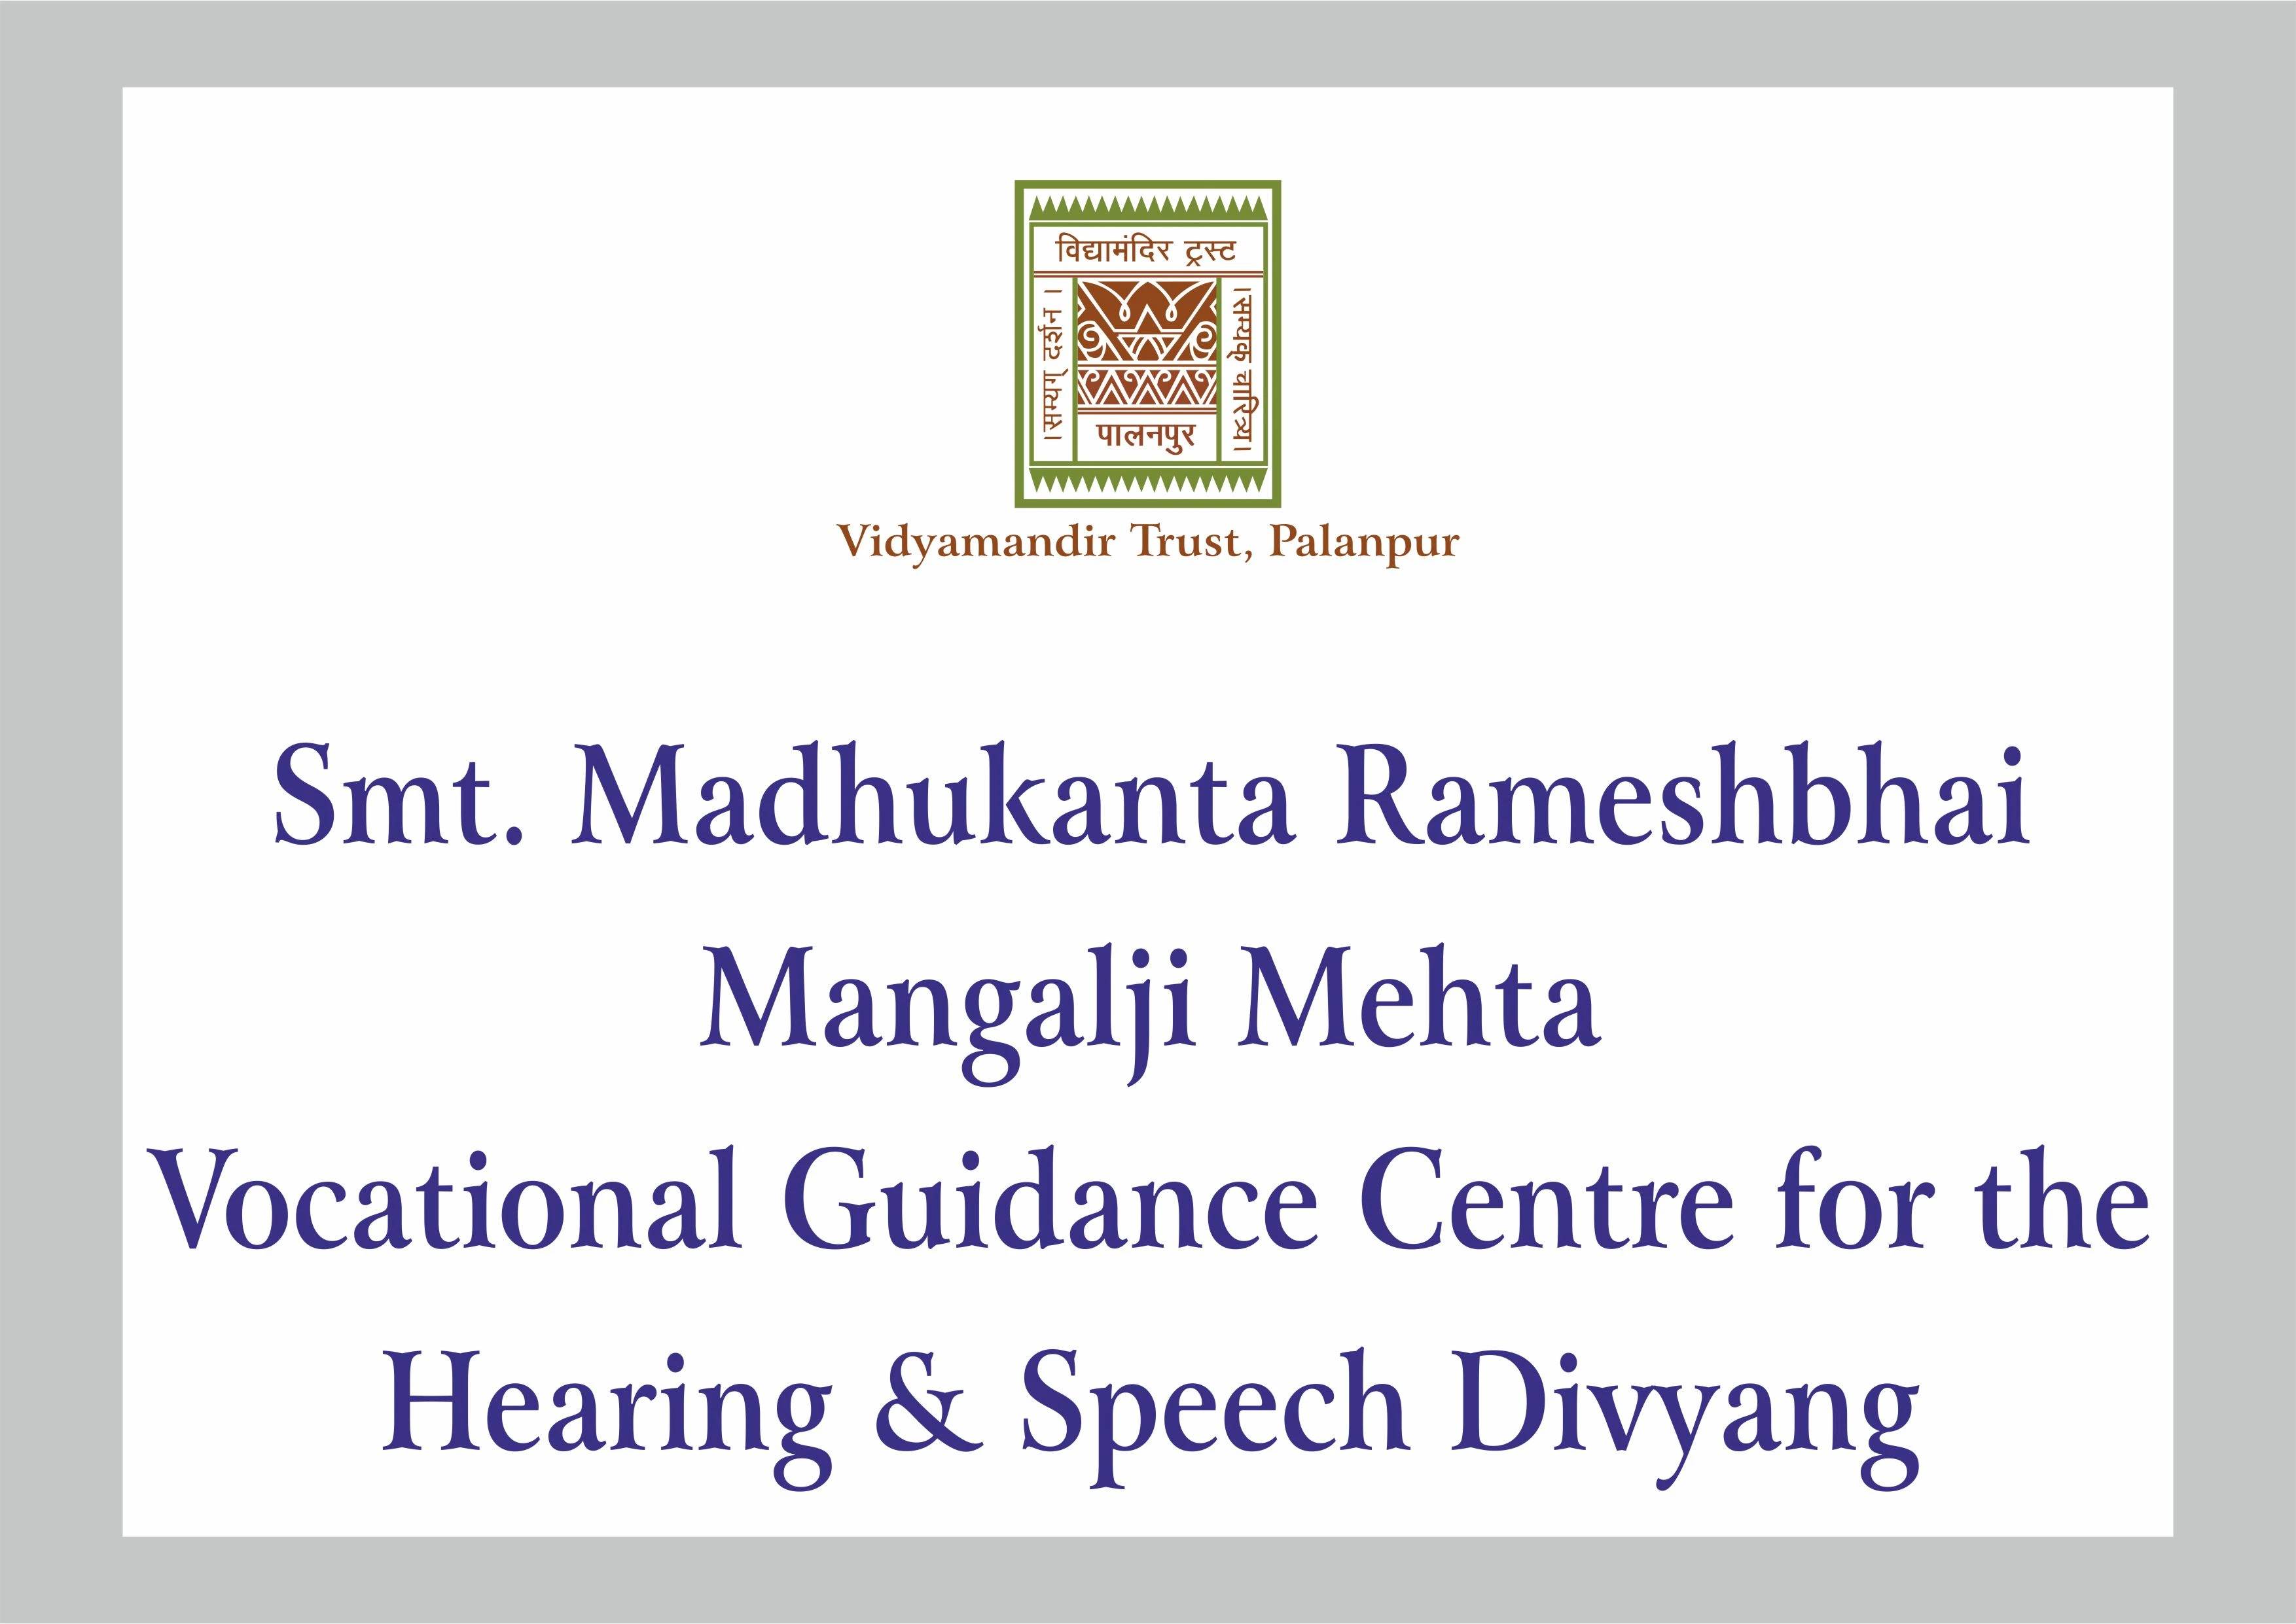 Smt. Madhukanta Rameshbhai Mangalji Mehta Vocational Guidance Centre for the Hearing & Speech Divyang - Building Photo